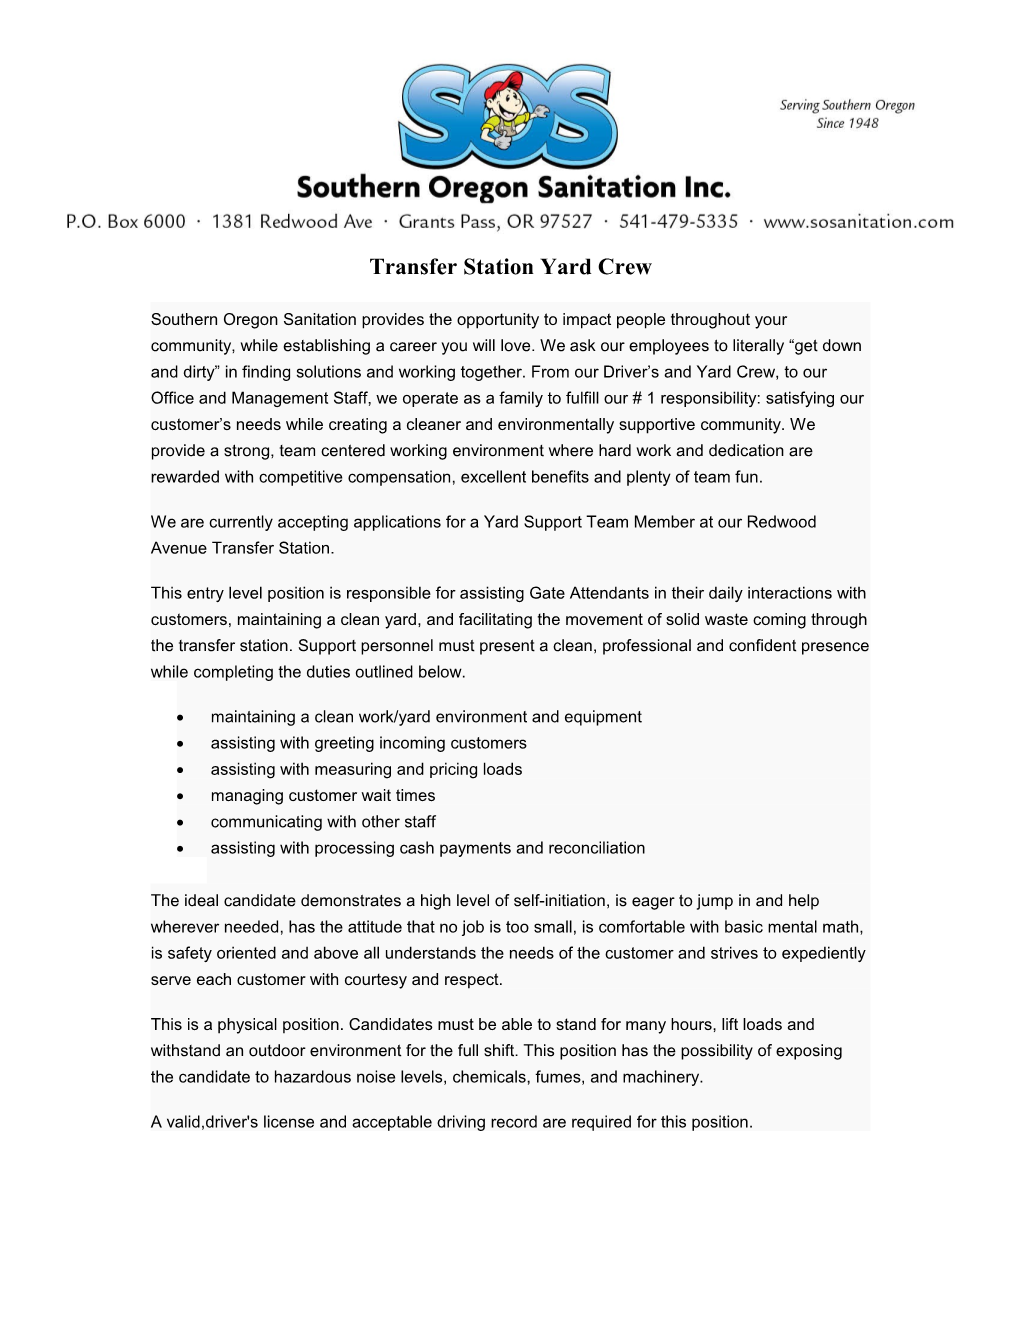 Southern Oregon Sanitation, Inc